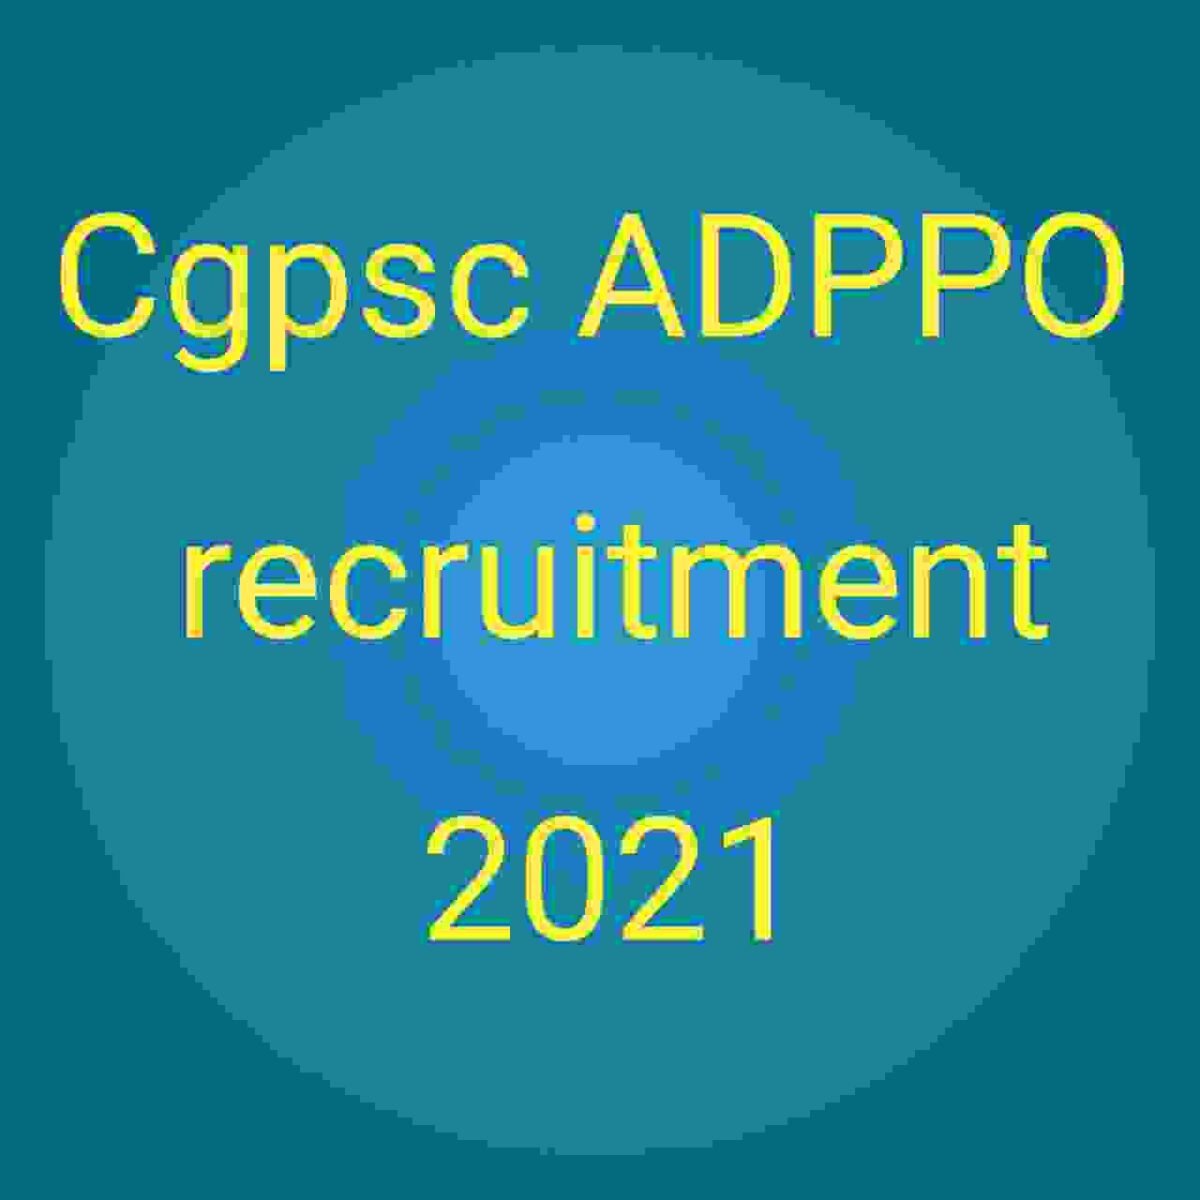 Cgpsc ADPPO vacancy 2021